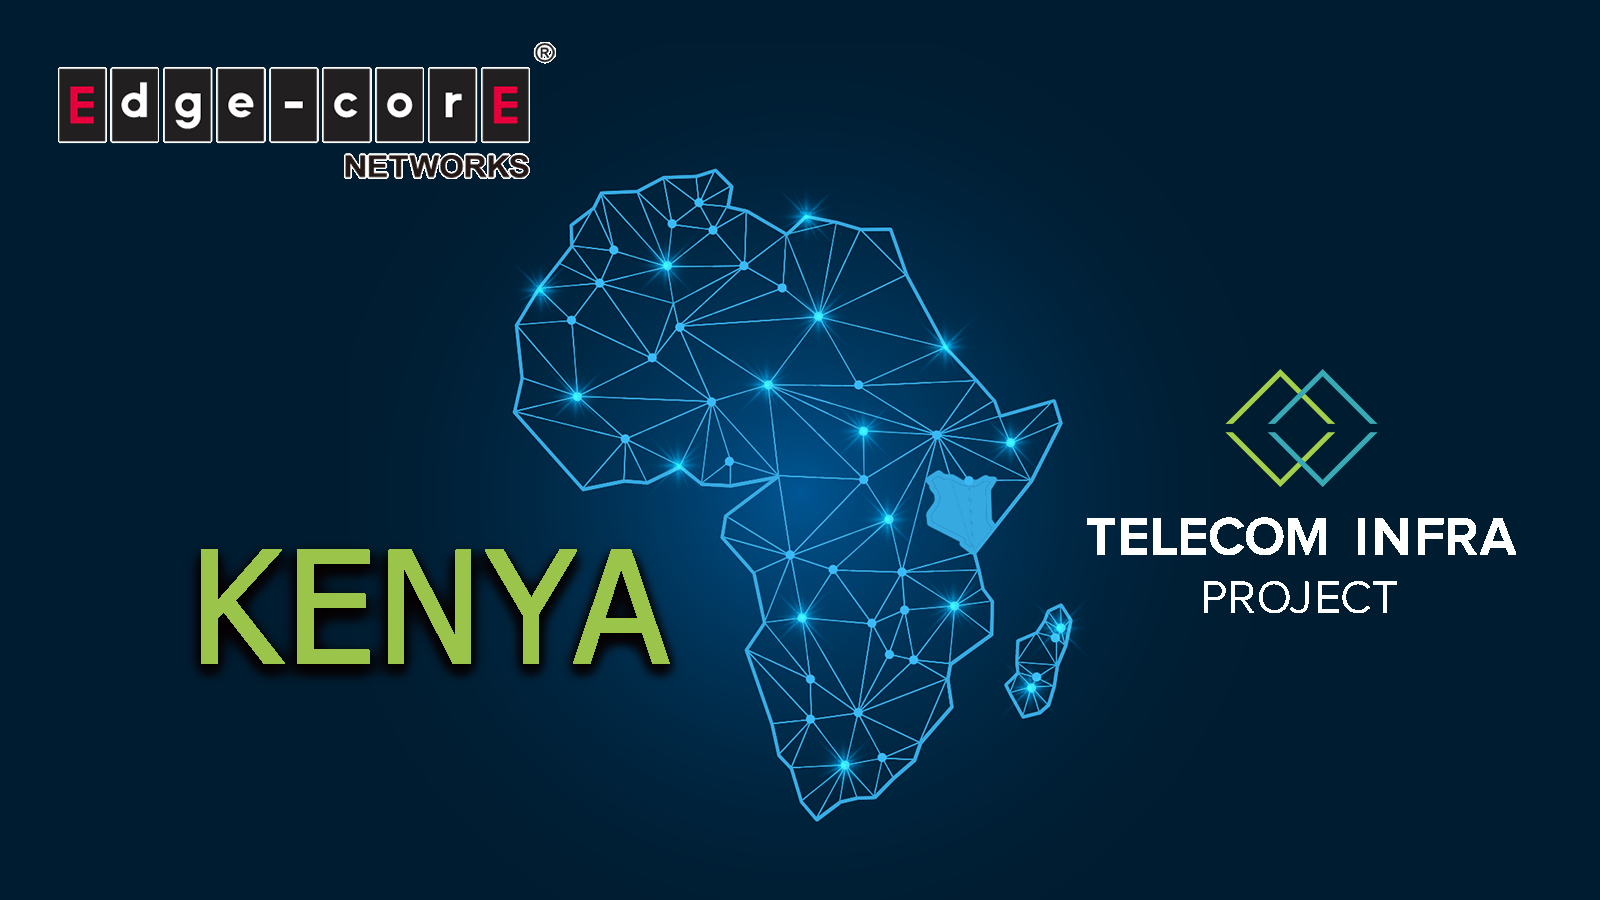 Edgecore Creates Wi-Fi Solutions in Kenya